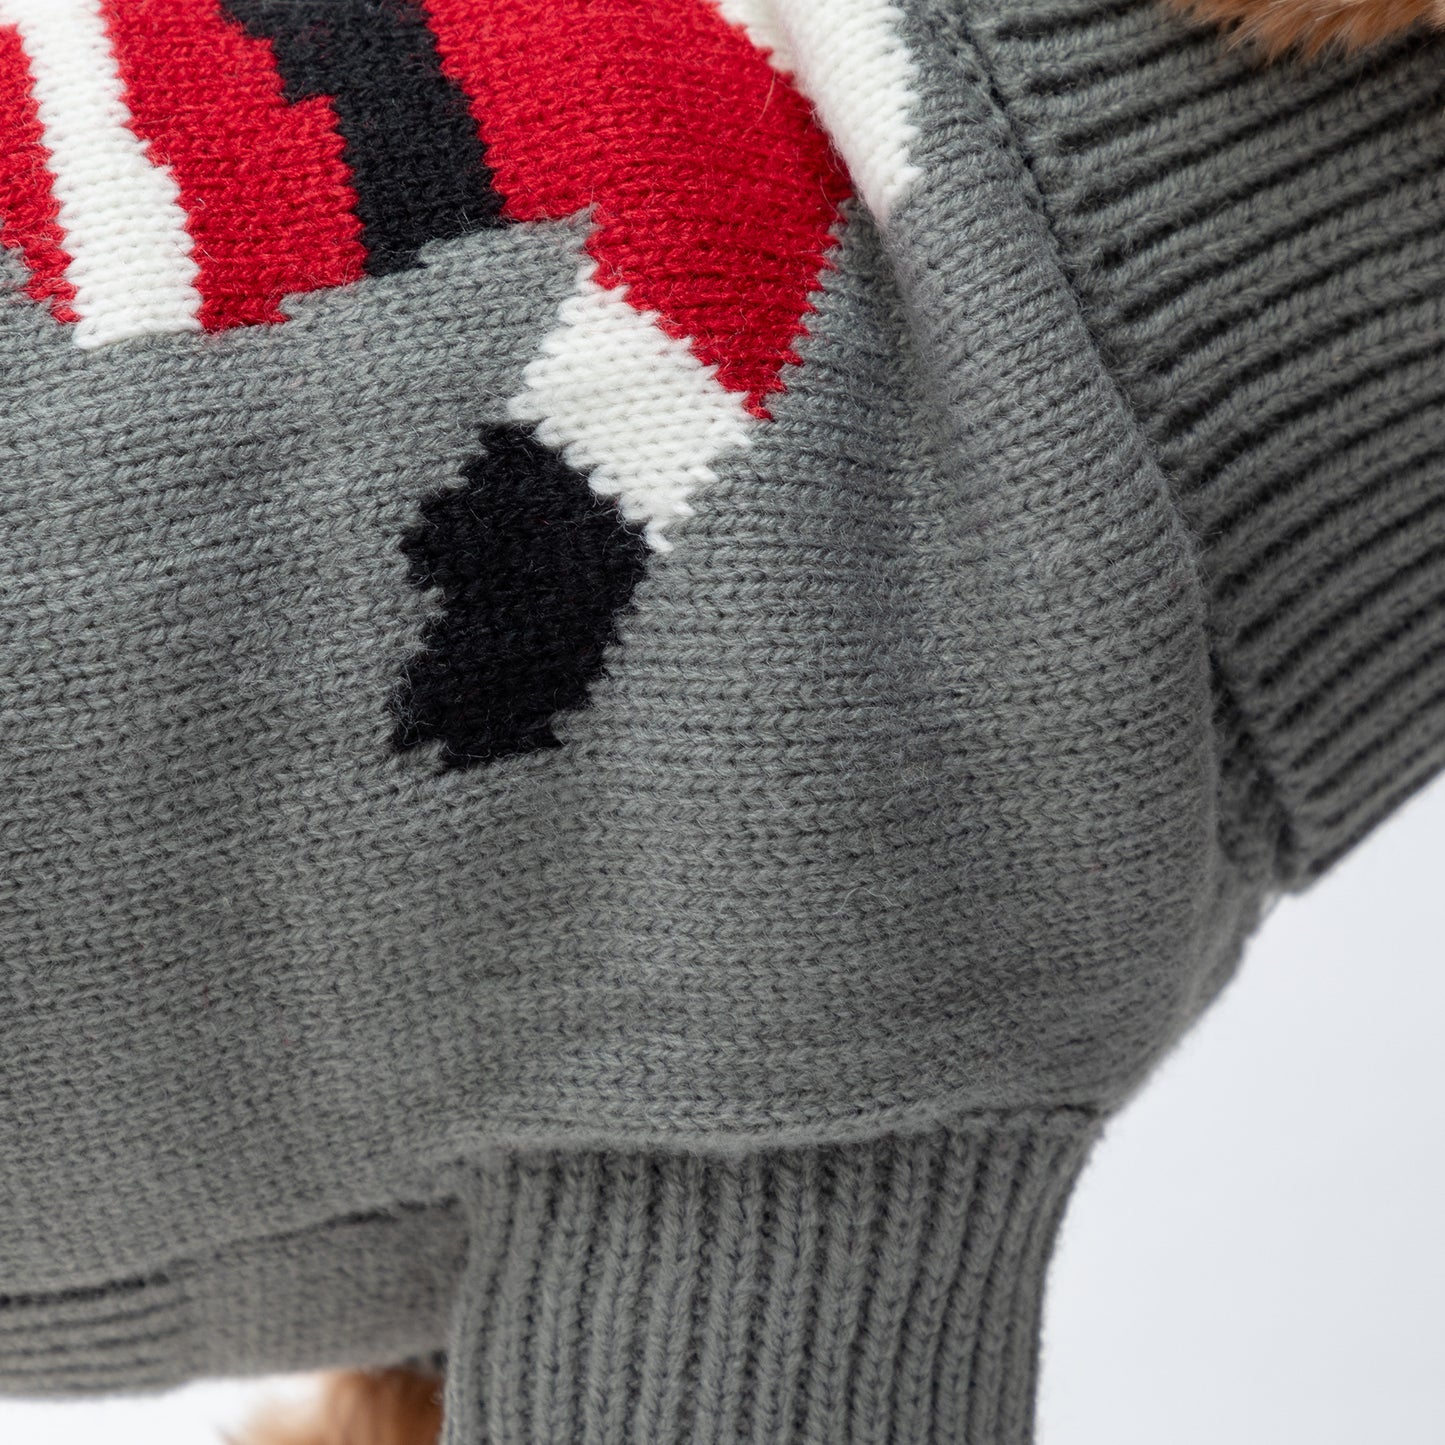 Cozy Christmas Pet Sweater